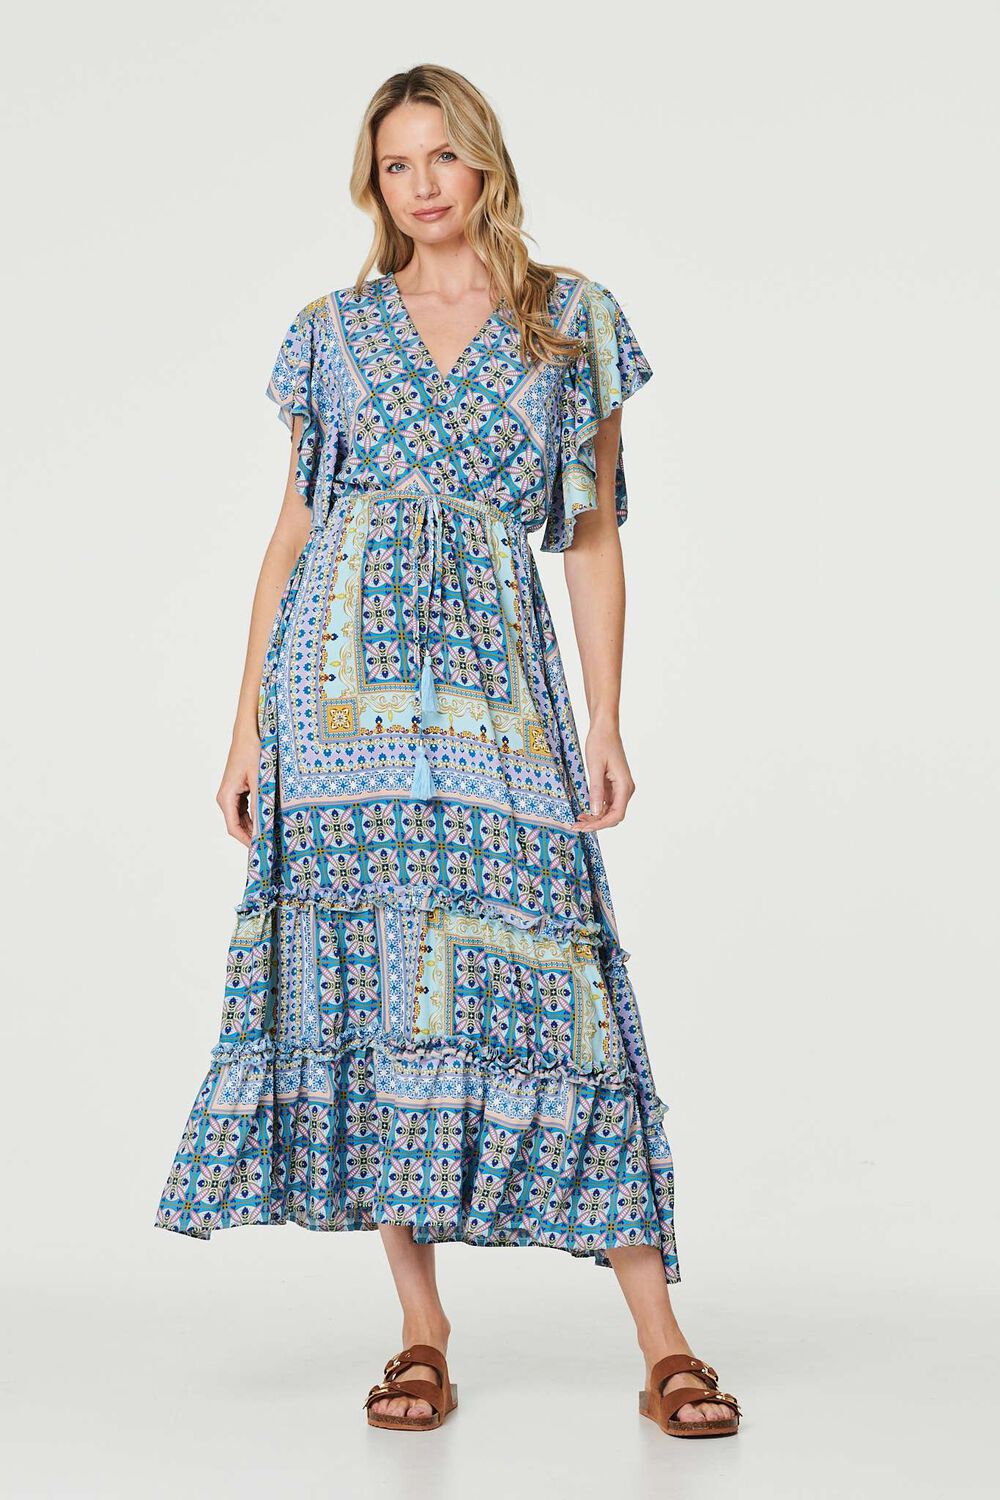 Izabel London Blue - Printed Frill Sleeve Maxi Dress, Size: 18